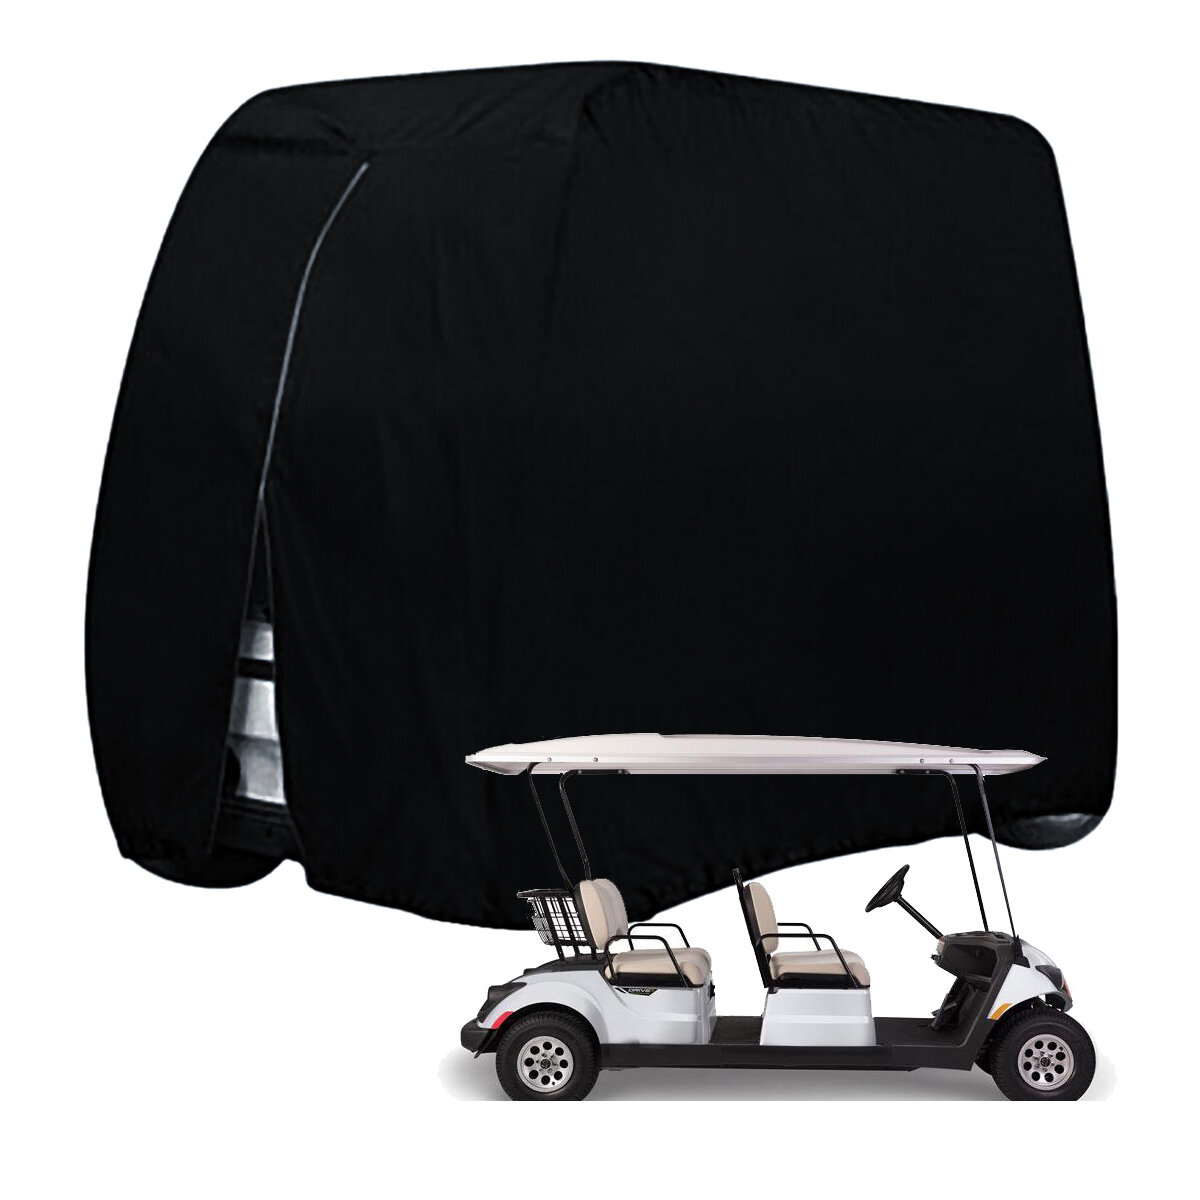 Waterdichte Oxford doek PVC Golf Car Cart Stofkap voor Club Car Rain Sneeuw Stofdichte bescherming C